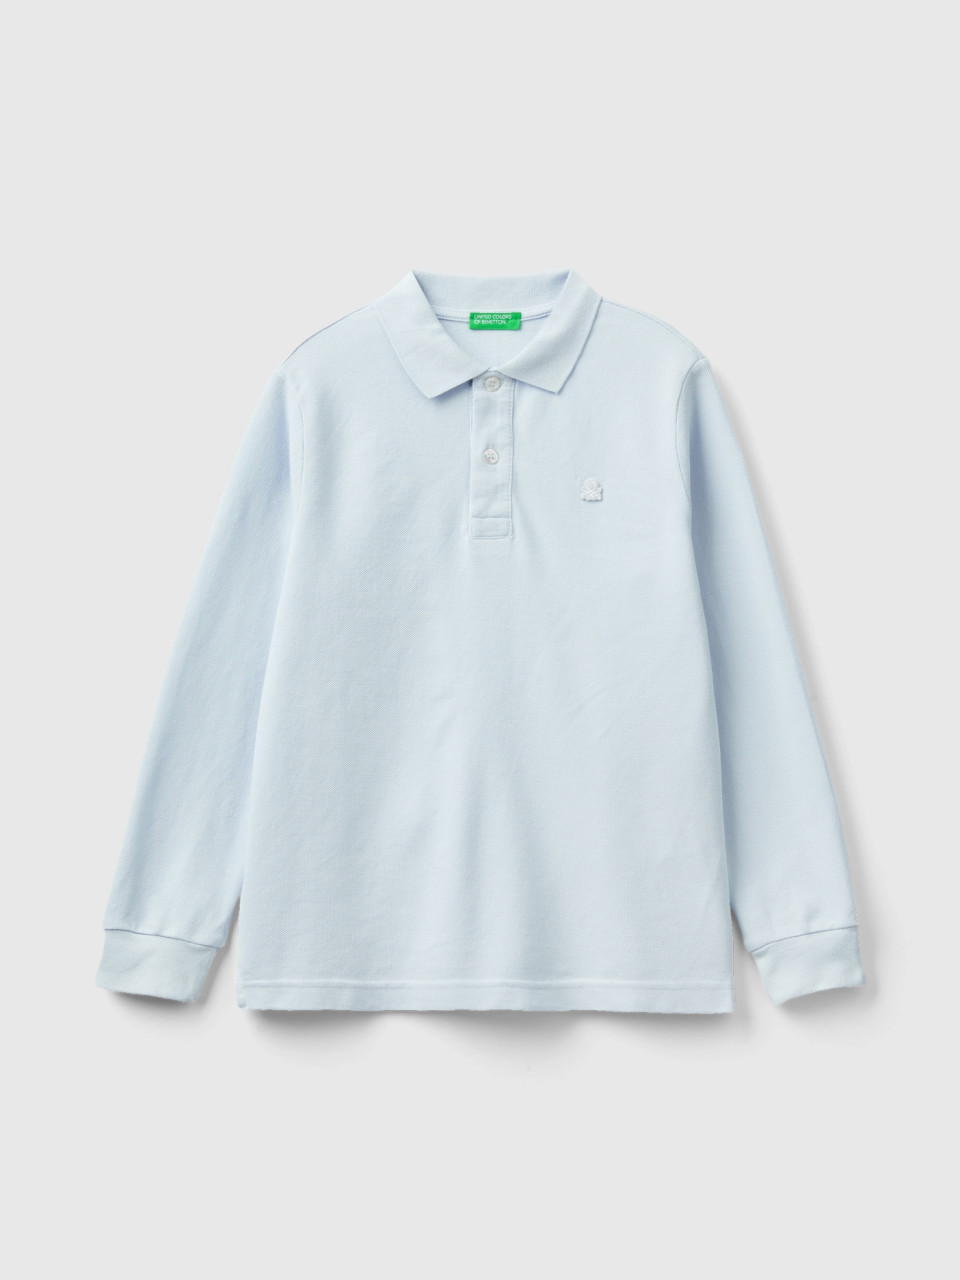 Benetton, 100% Organic Cotton Long Sleeve Polo, Sky Blue, Kids